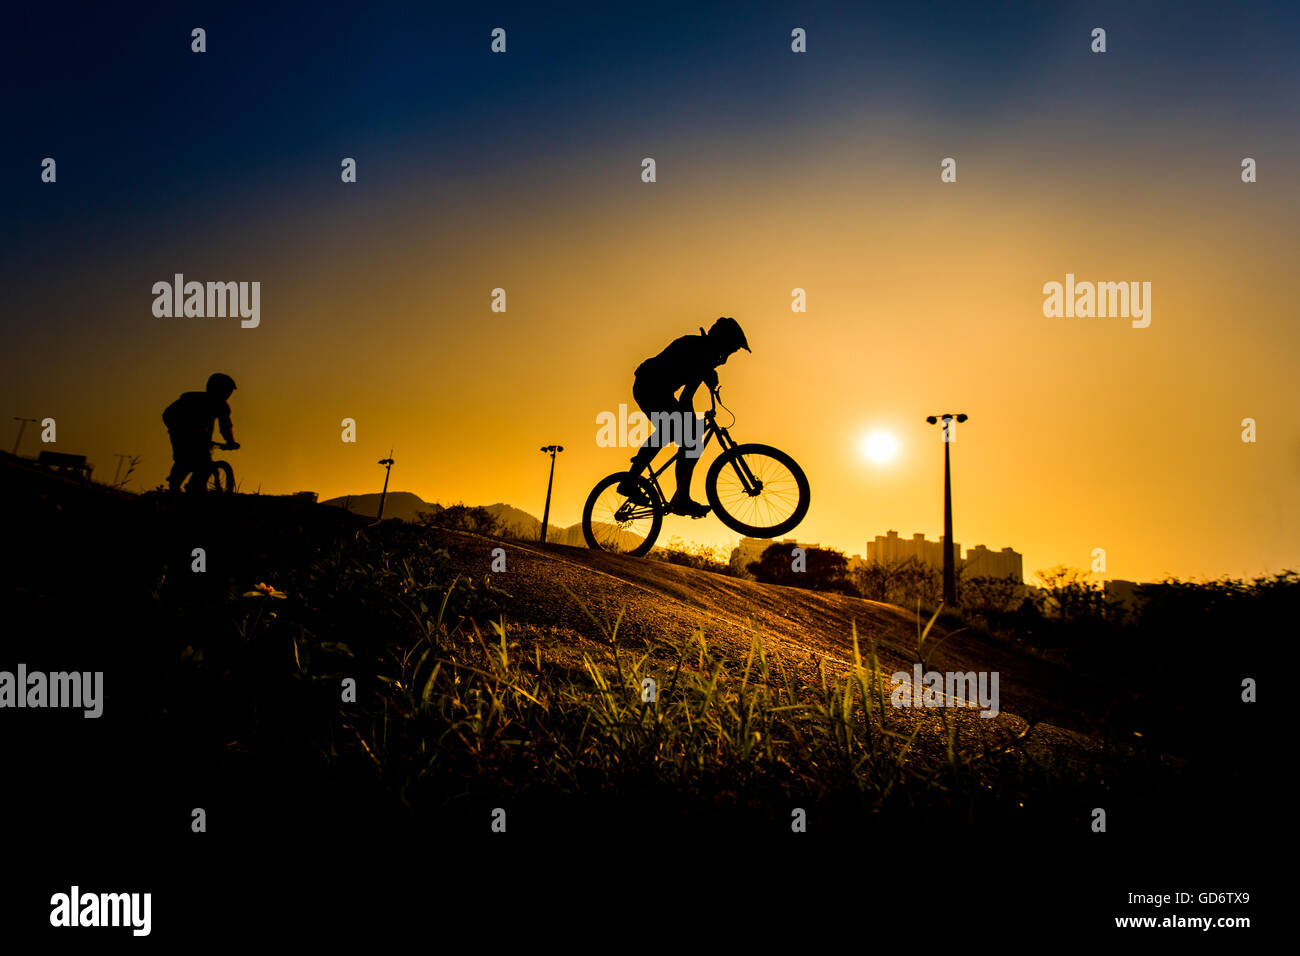 Silhouette Of Stunt Bmx Rider - color tone tuned Stock Photo